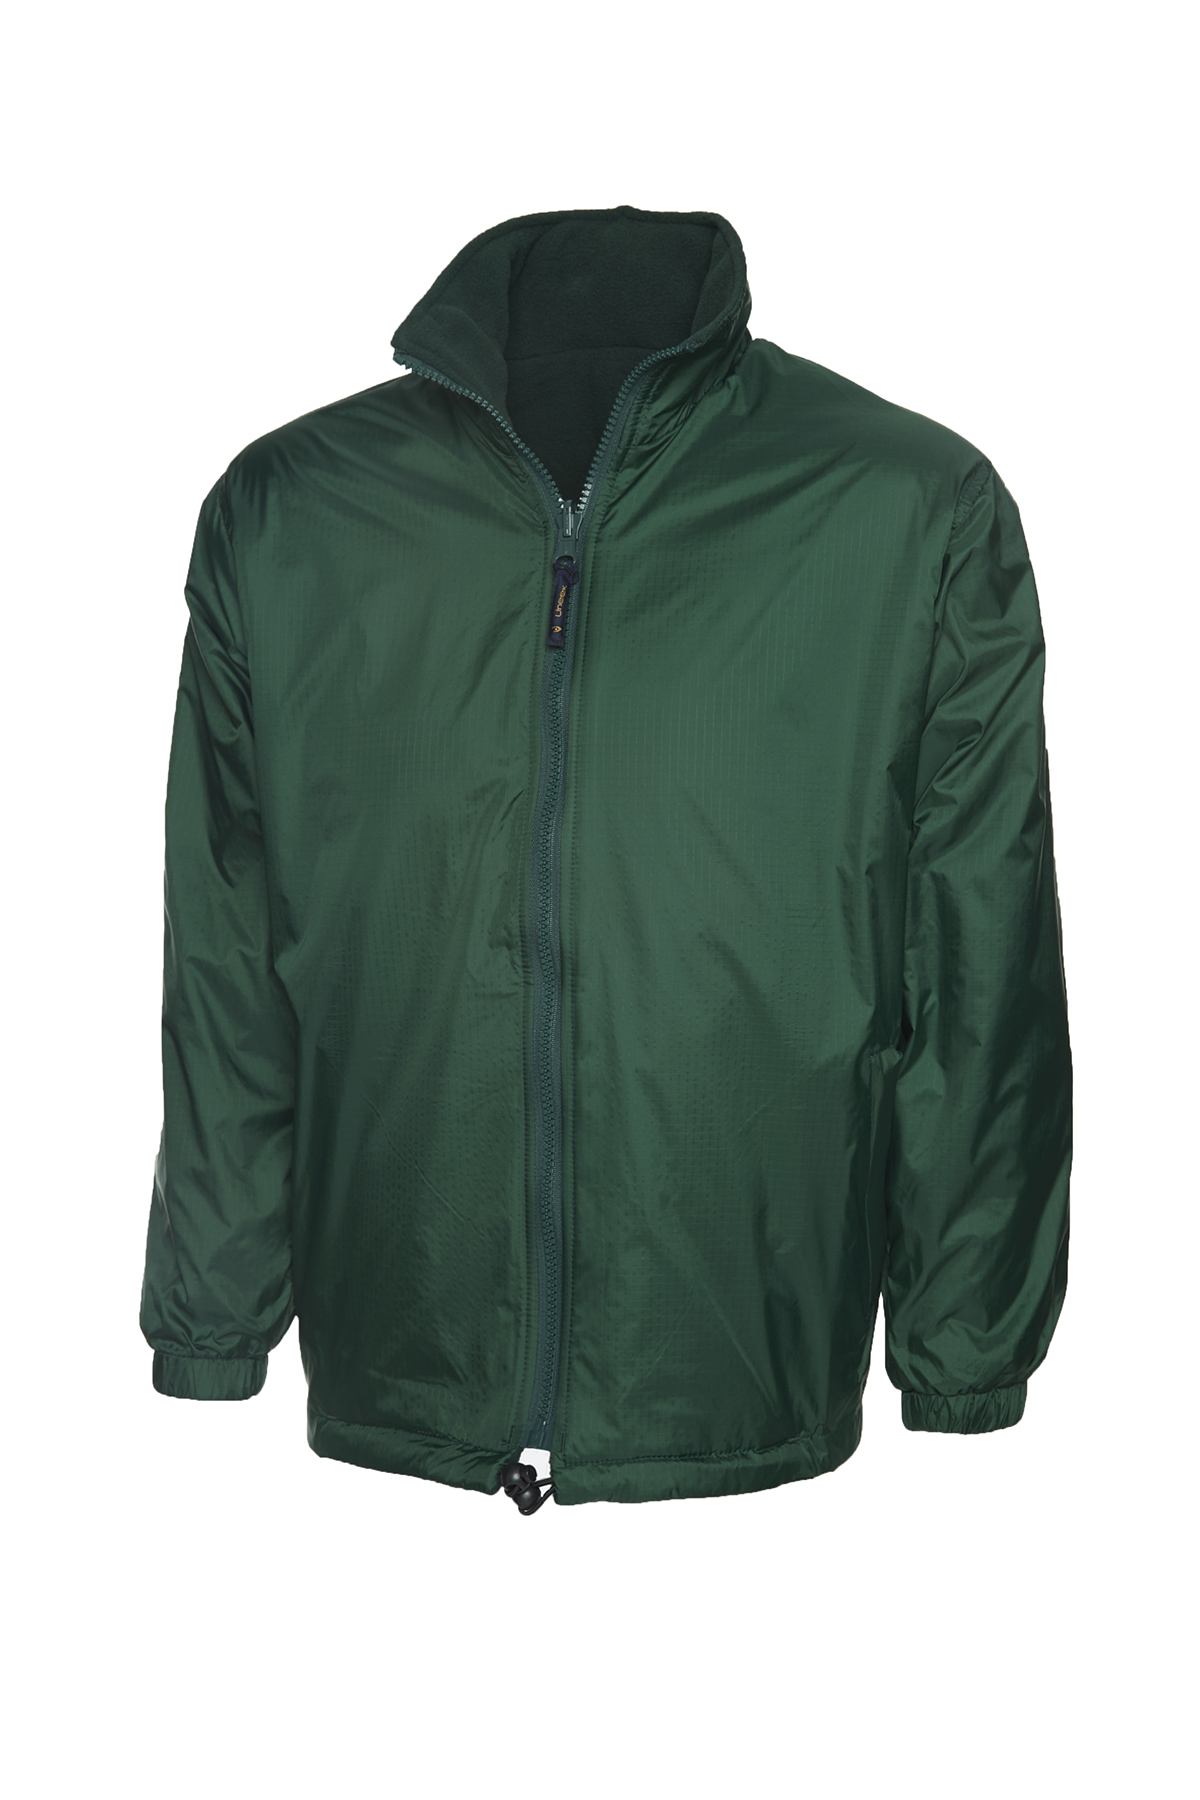 Premium Reversible Fleece Jackets | Workwear, Jackets | Embroidery In House